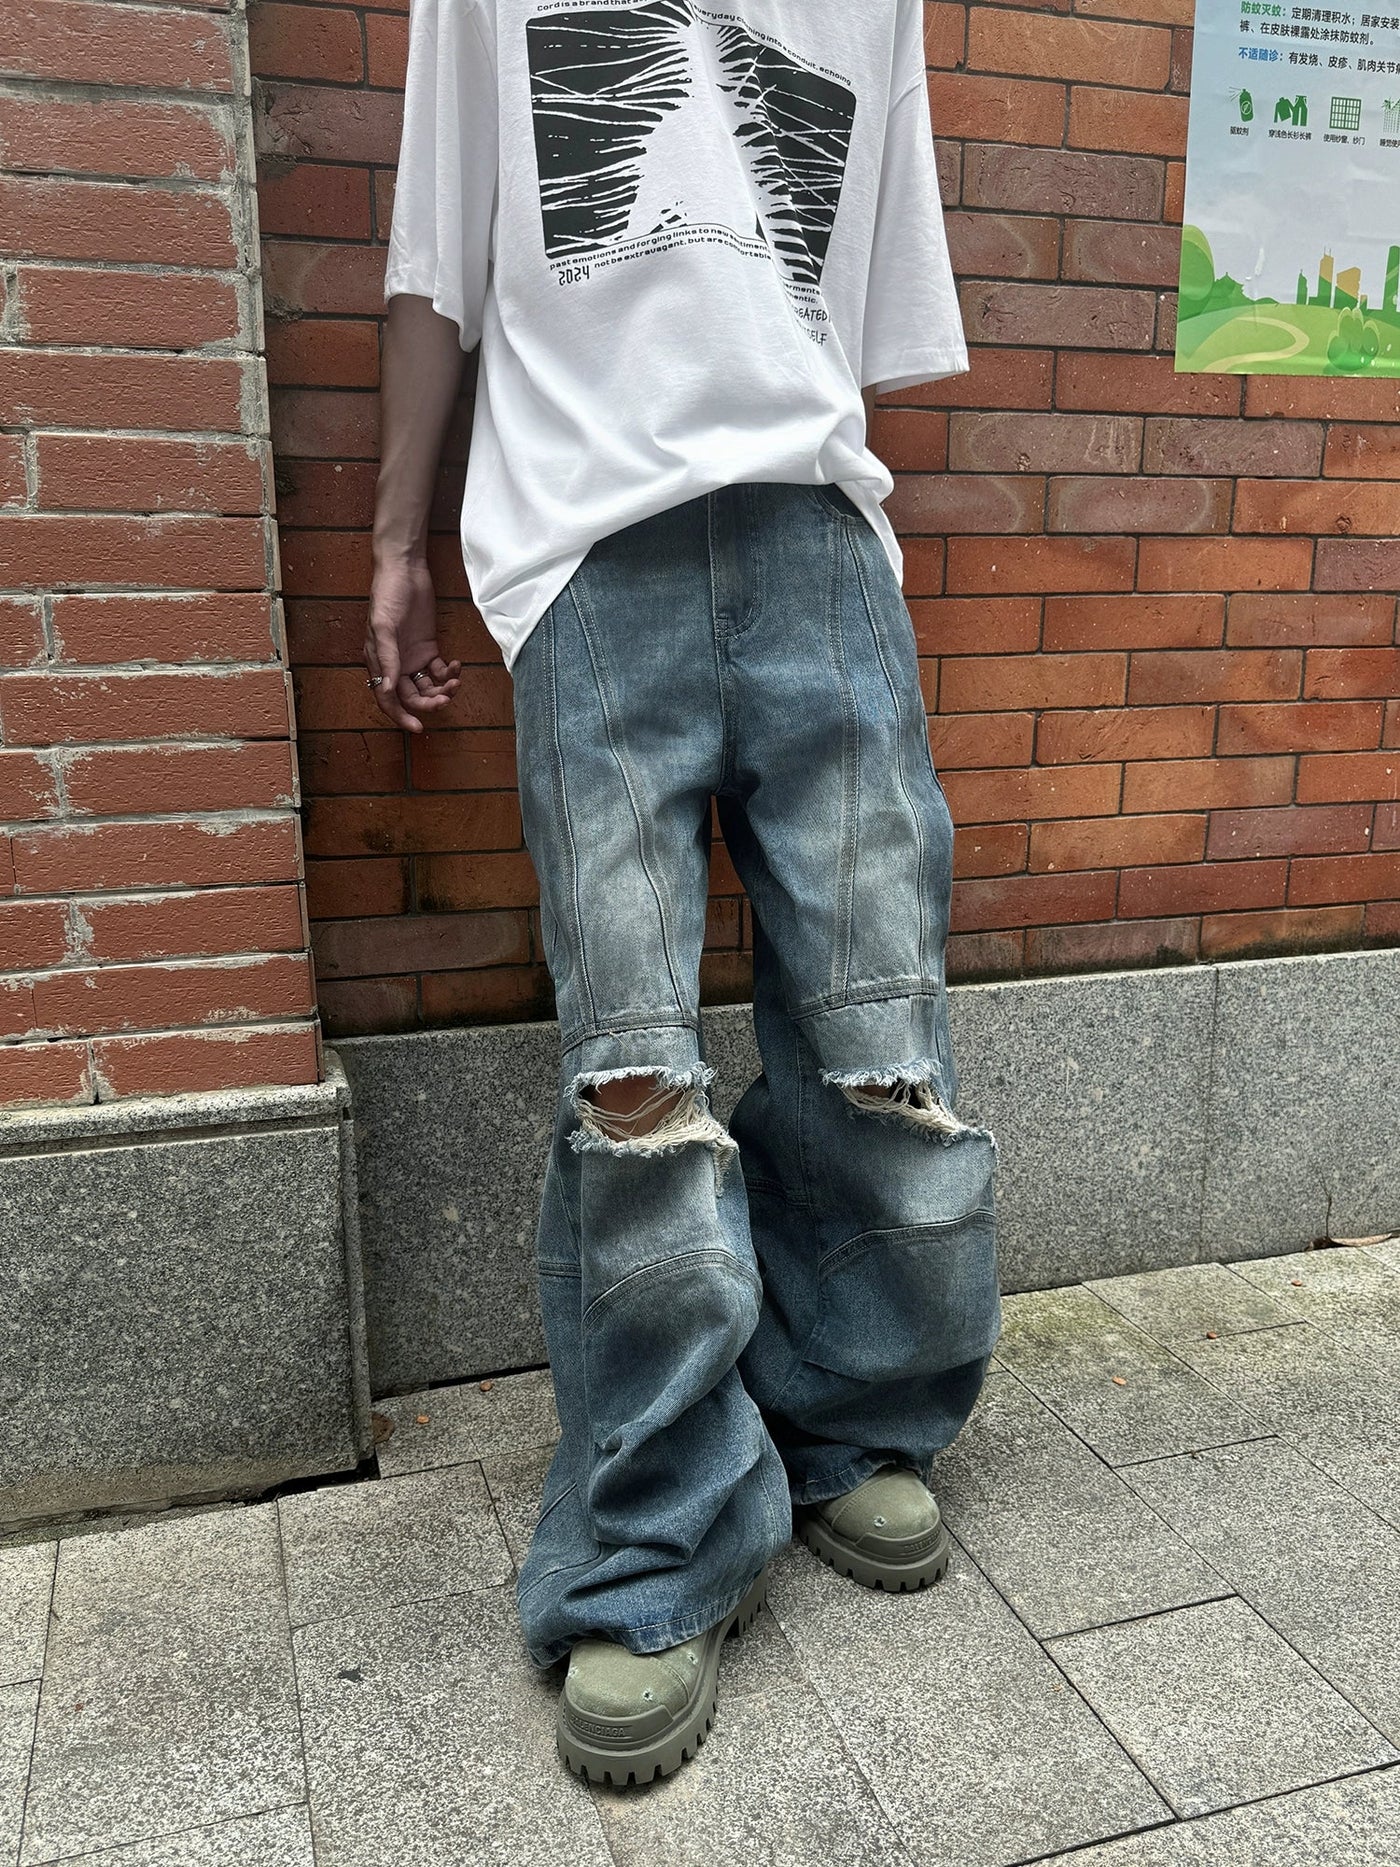 Knee Tassel Ripped Jeans Korean Street Fashion Jeans By Ash Dark Shop Online at OH Vault